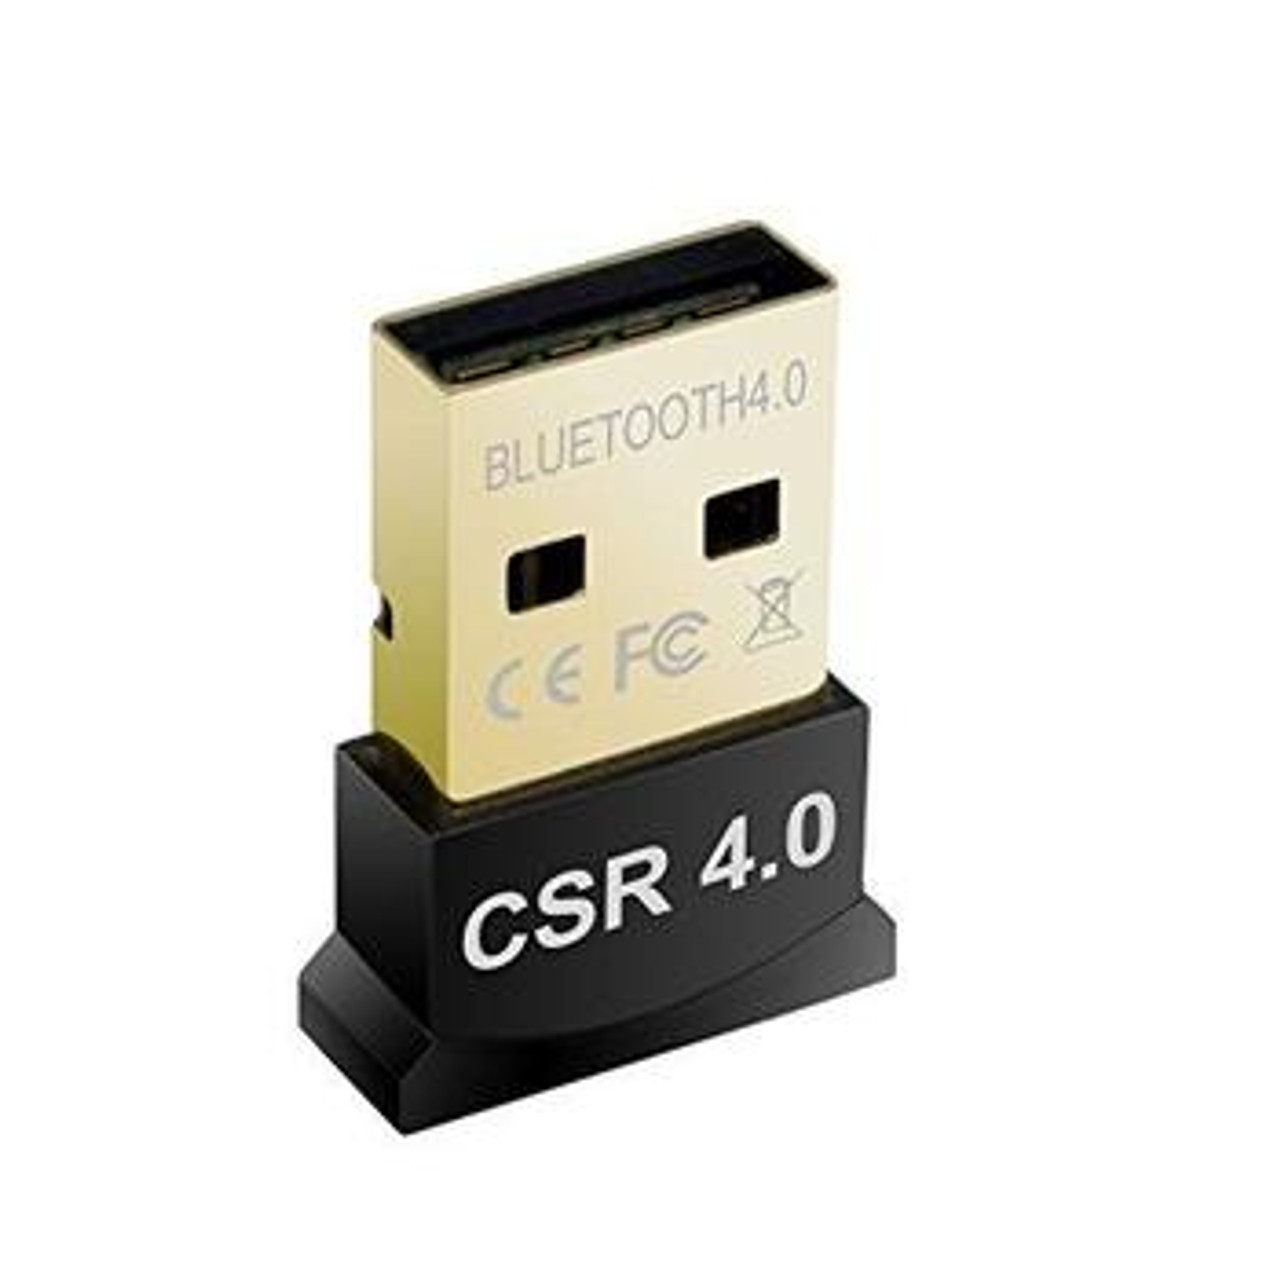 Deep-Tech USB Bluetooth Dongle Car Bluetooth 4.0 (Blue Cap), Model